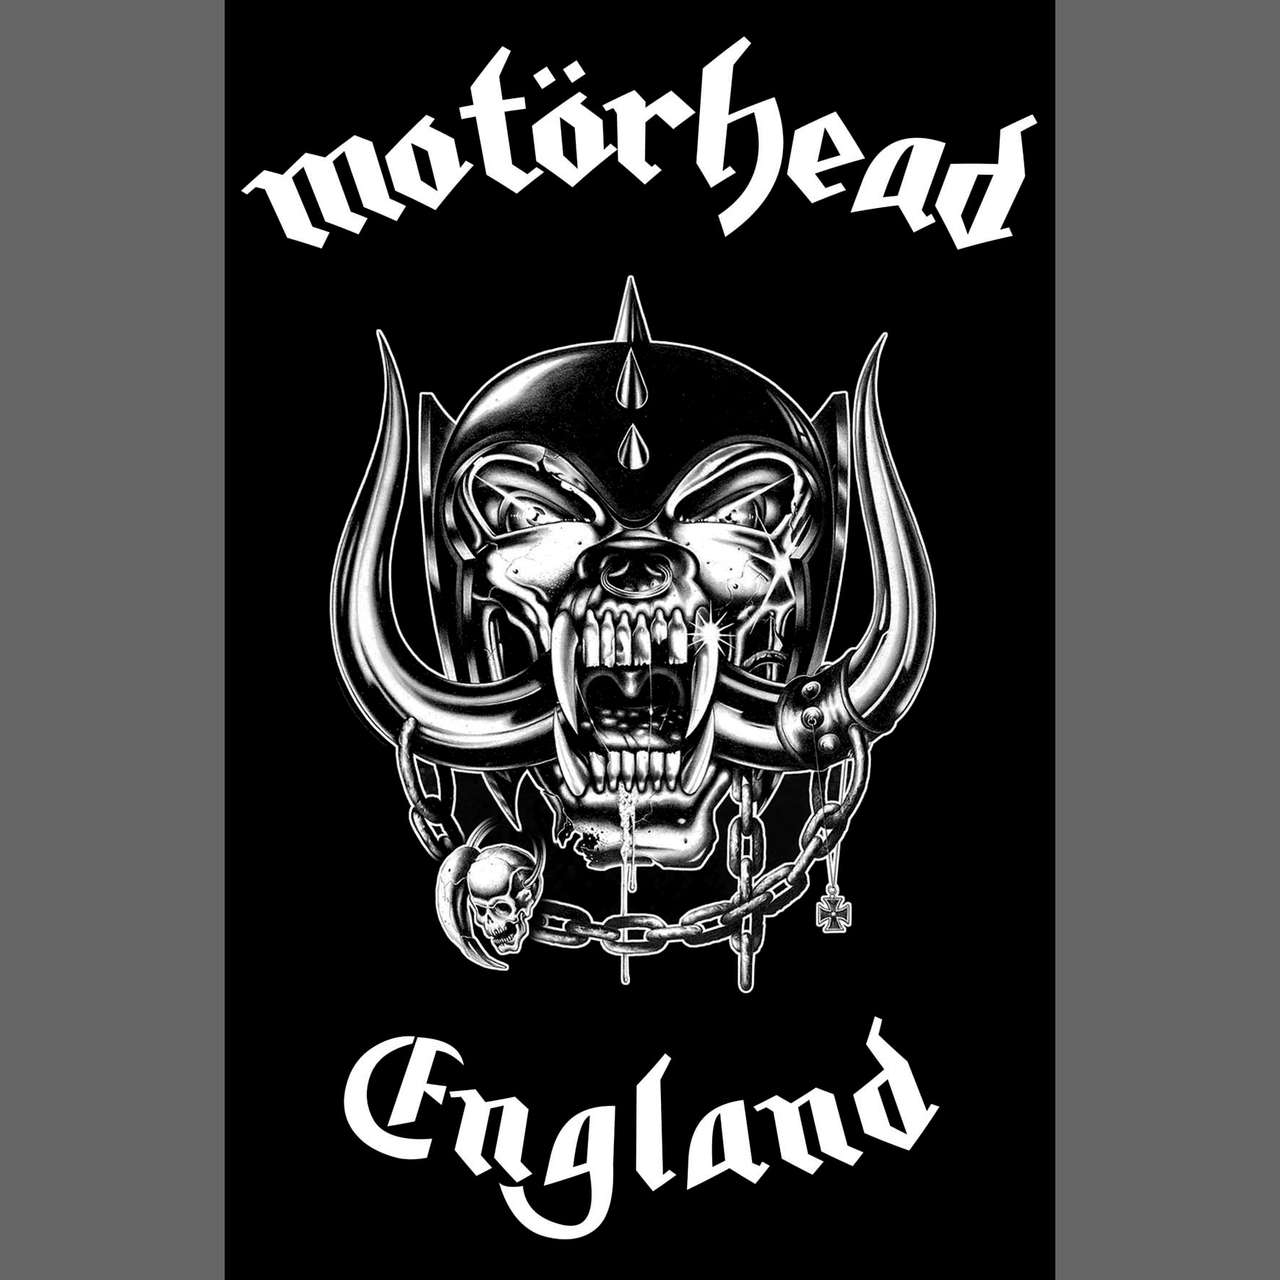 Motorhead - England (Textile Poster)